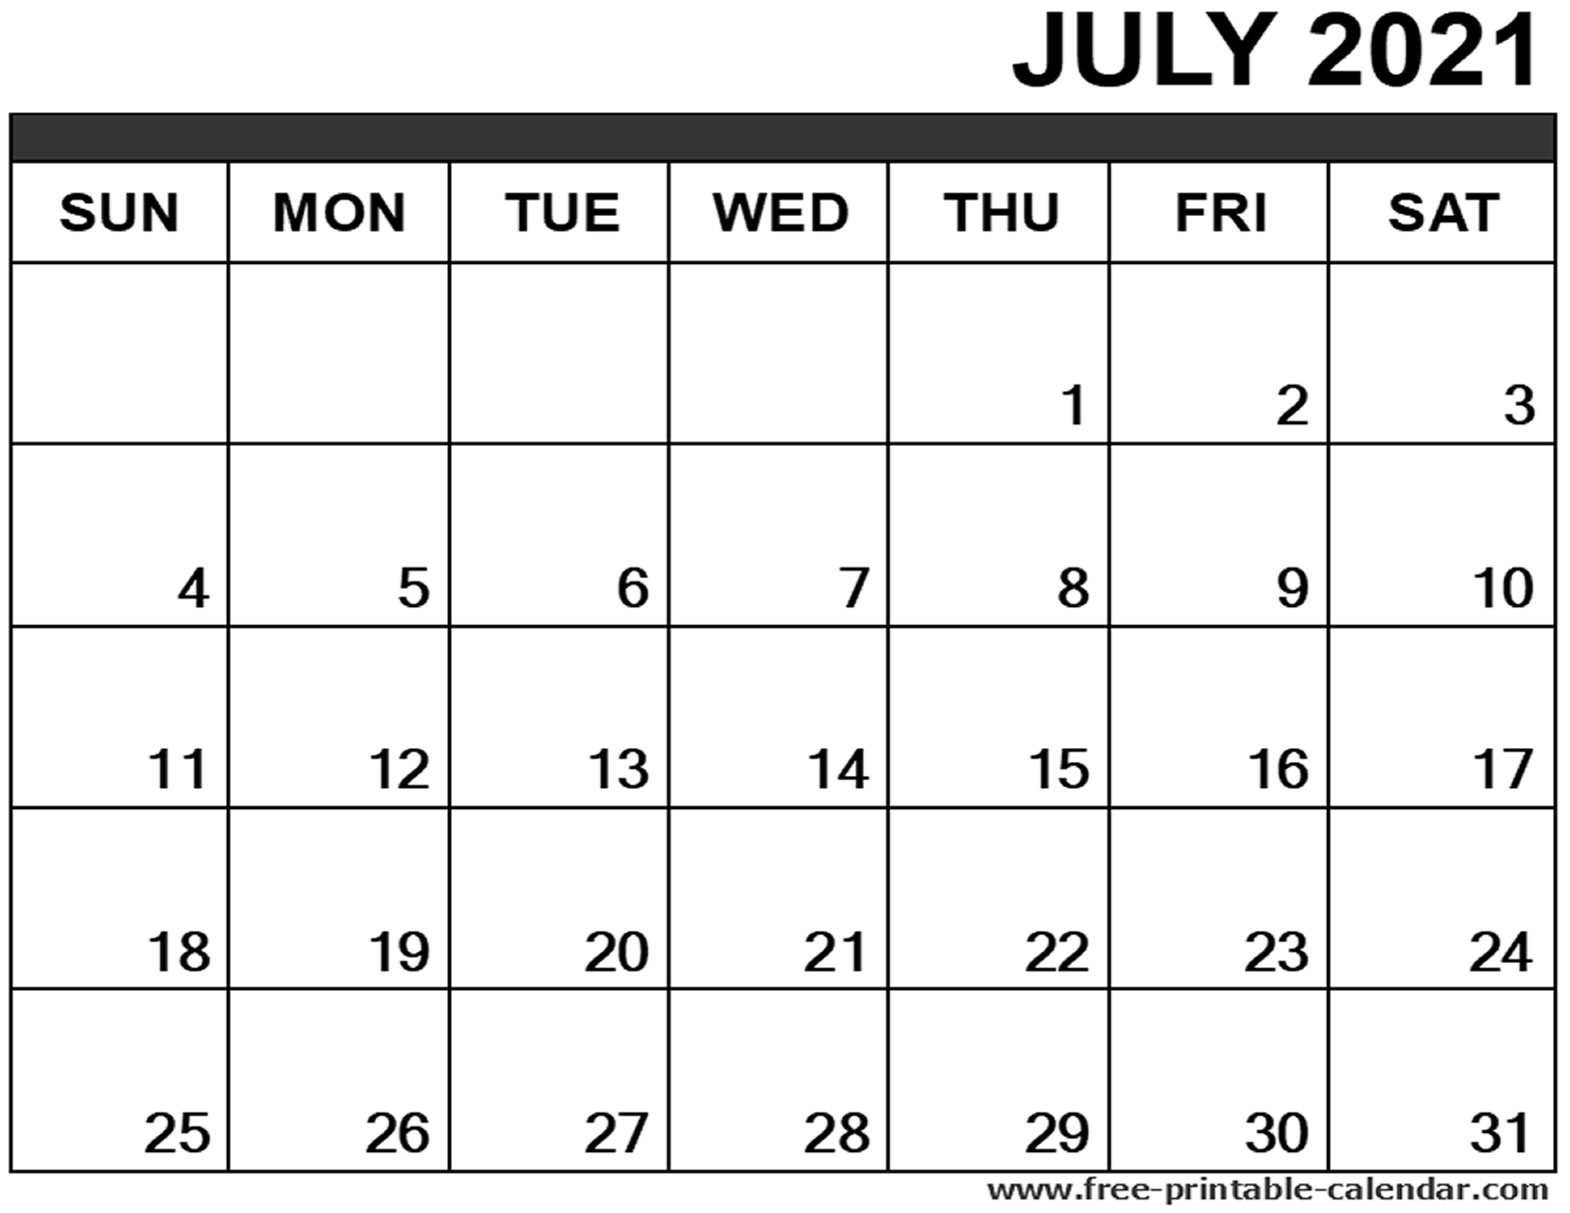 July 2021 Calendar Printable - Free-Printable-Calendar